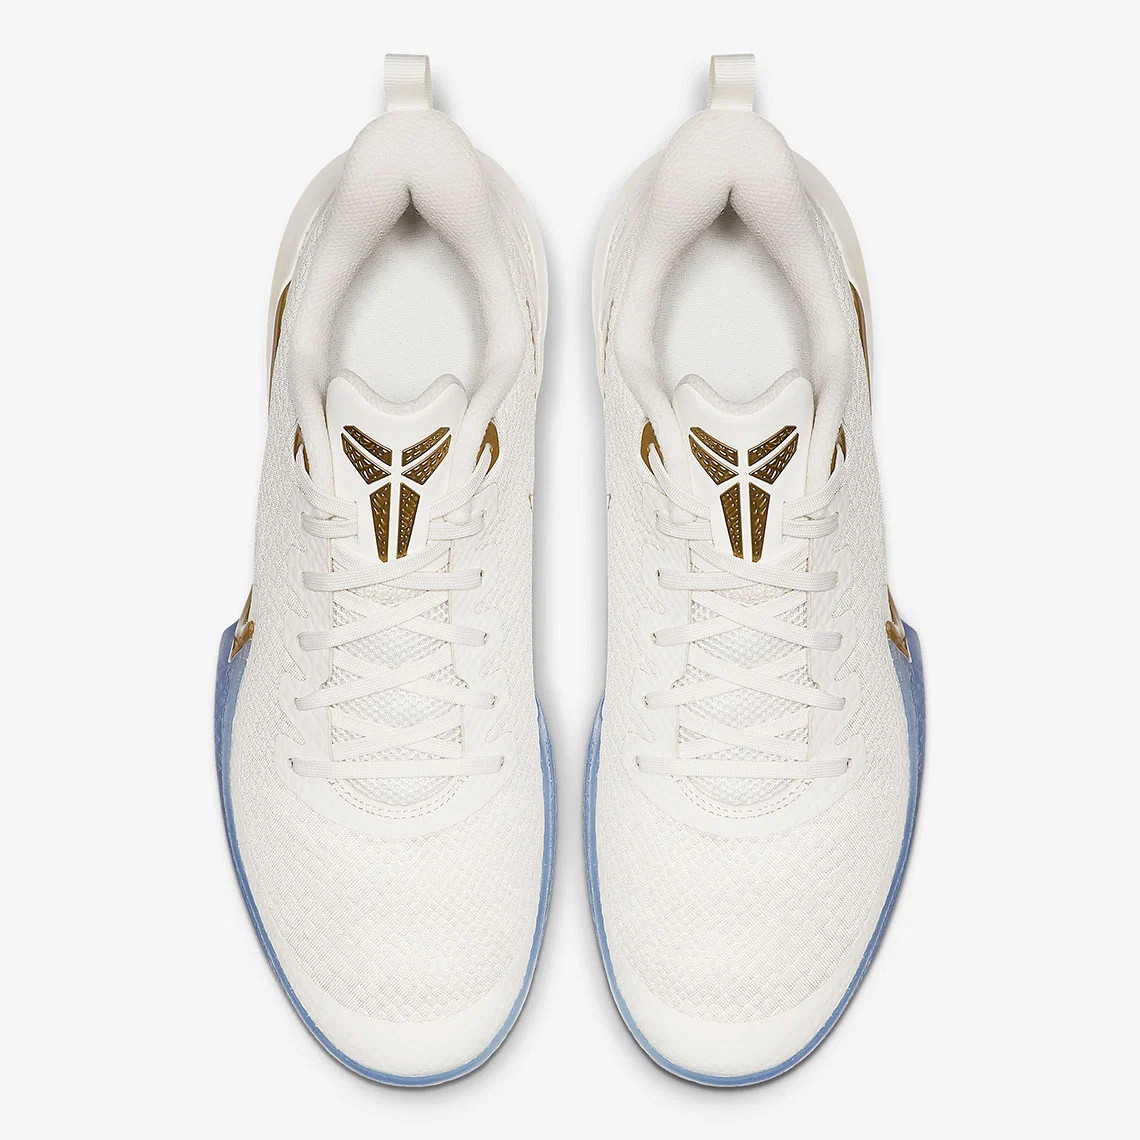 mm metallic boots - Nike Mamba Focus Big Stage White Gold Blue Basketball Shoes - 004 - GmarShops